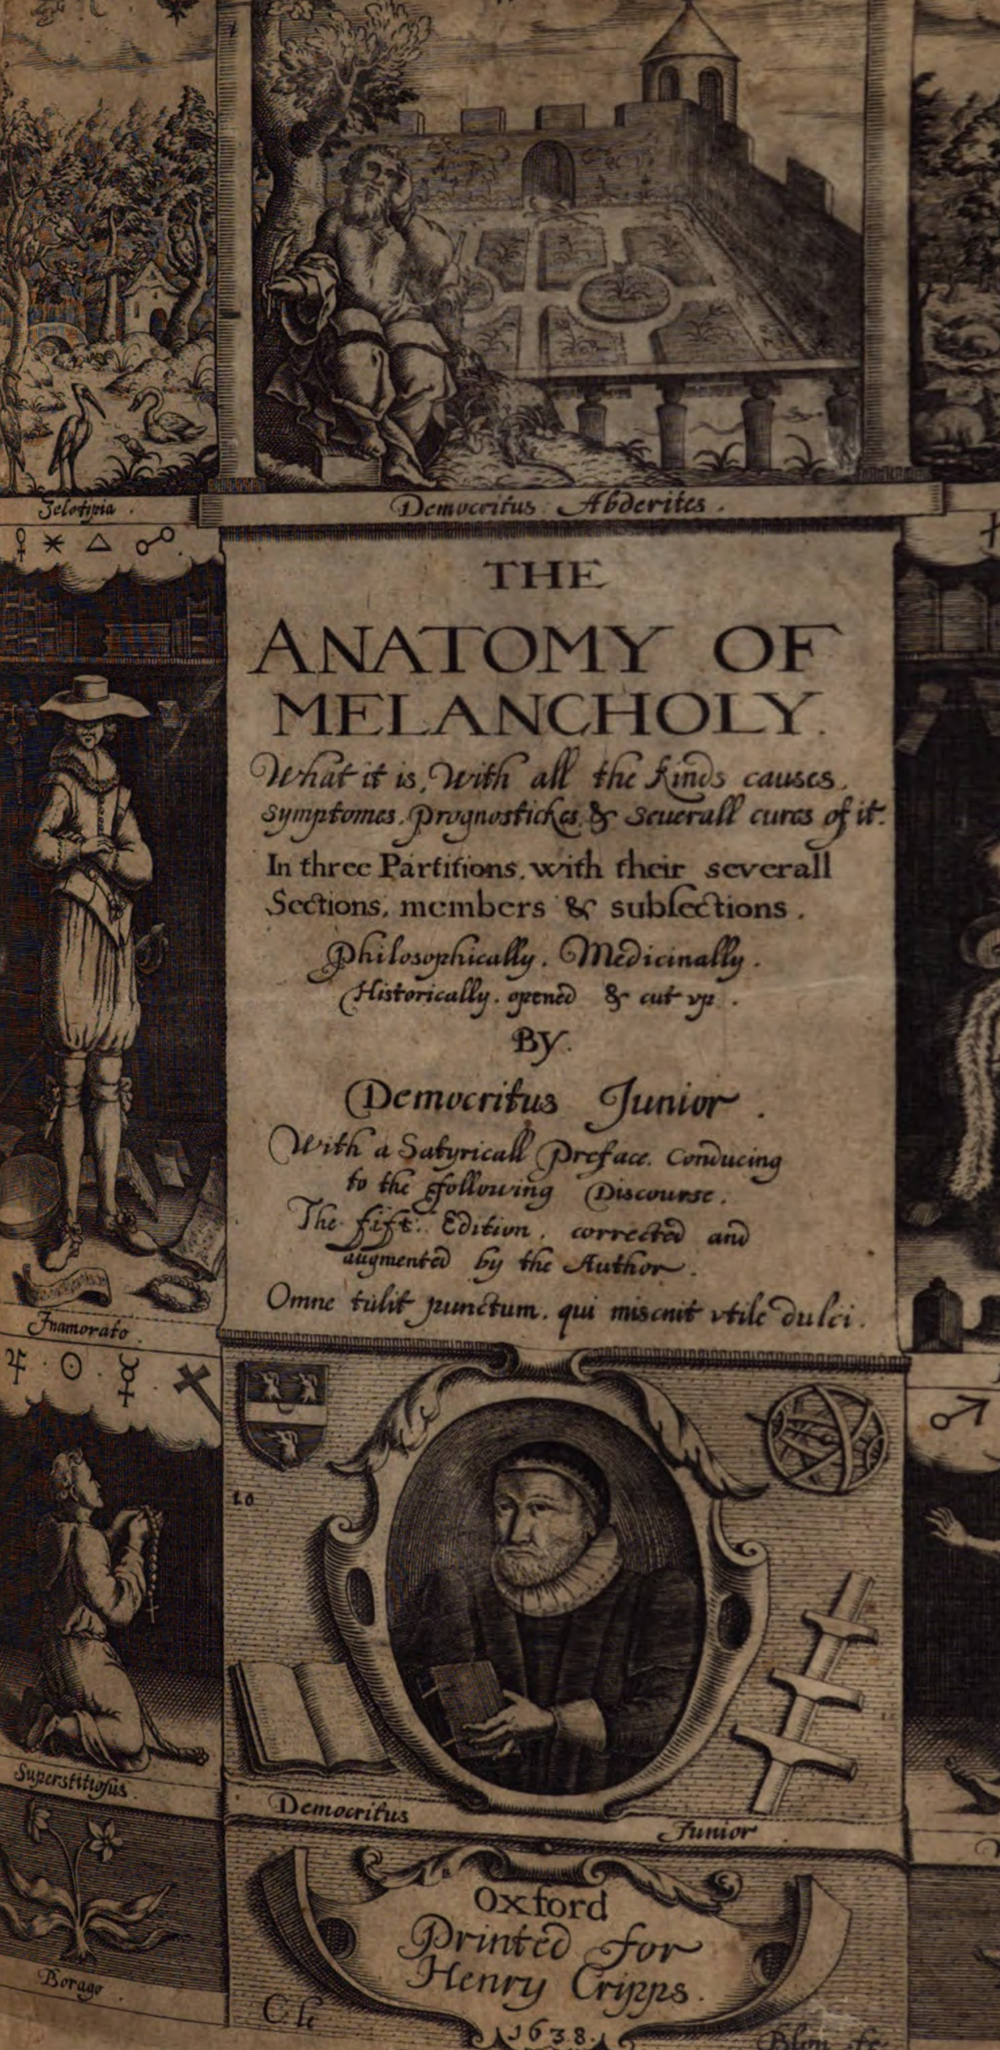 The Anatomy of Melancholy, by Robert Burton, 1638. HathiTrust Digital Library, original from the Universidad Complutense de Madrid.